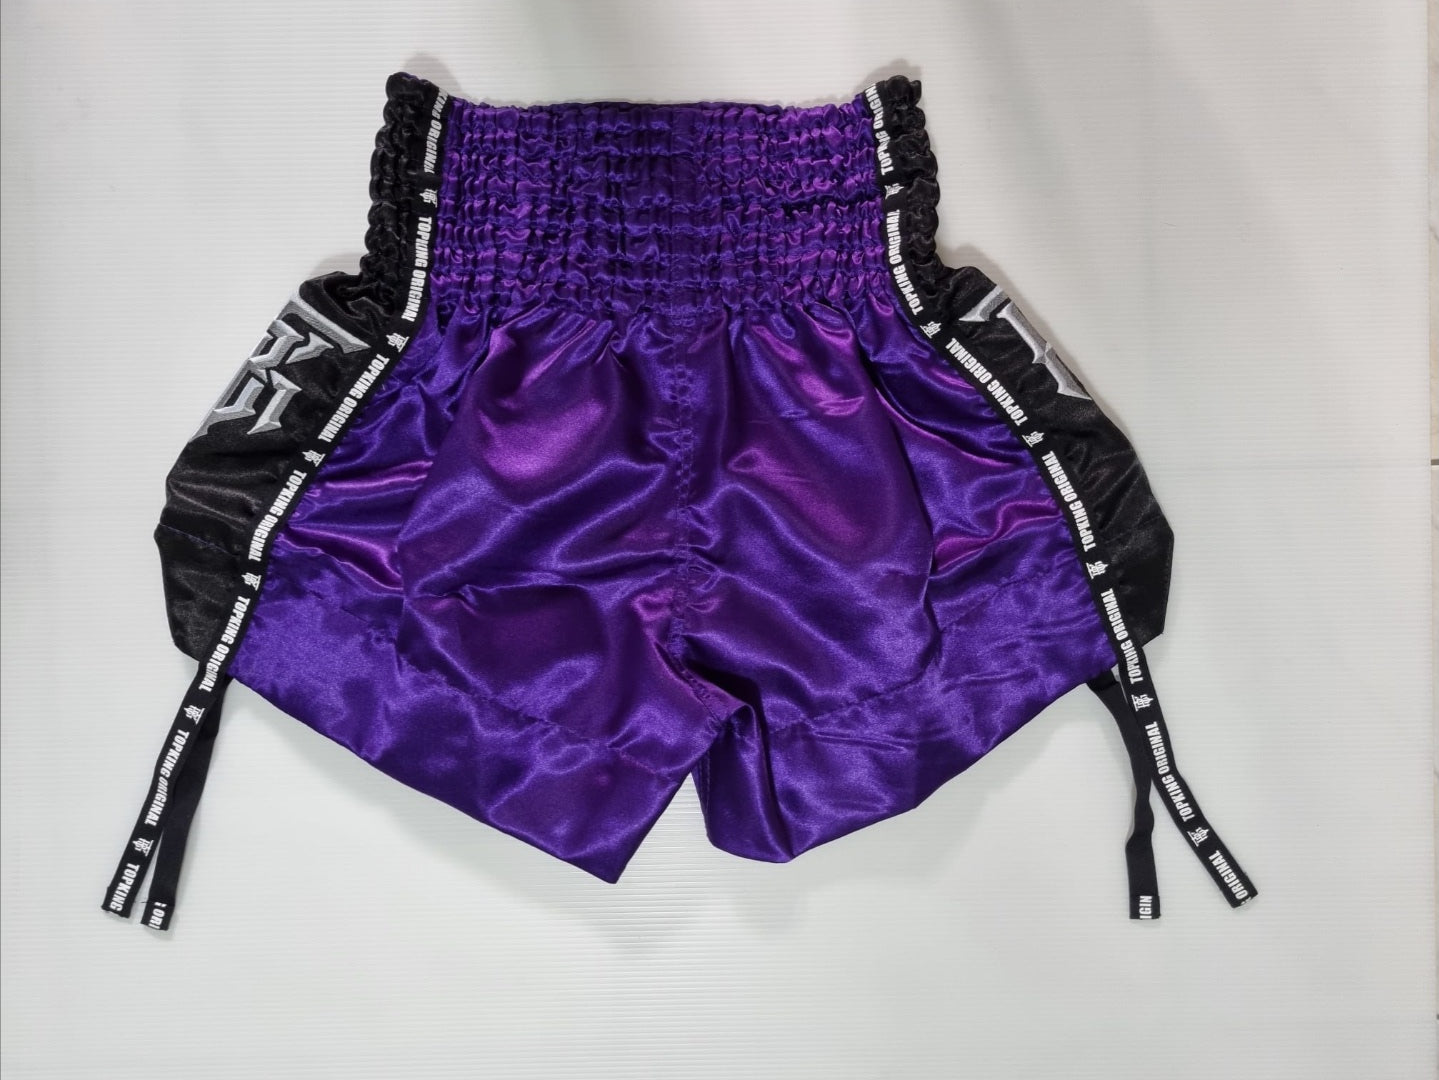 TKB Thai Boxing Shorts -  TKTBS-201 - Purple/Black